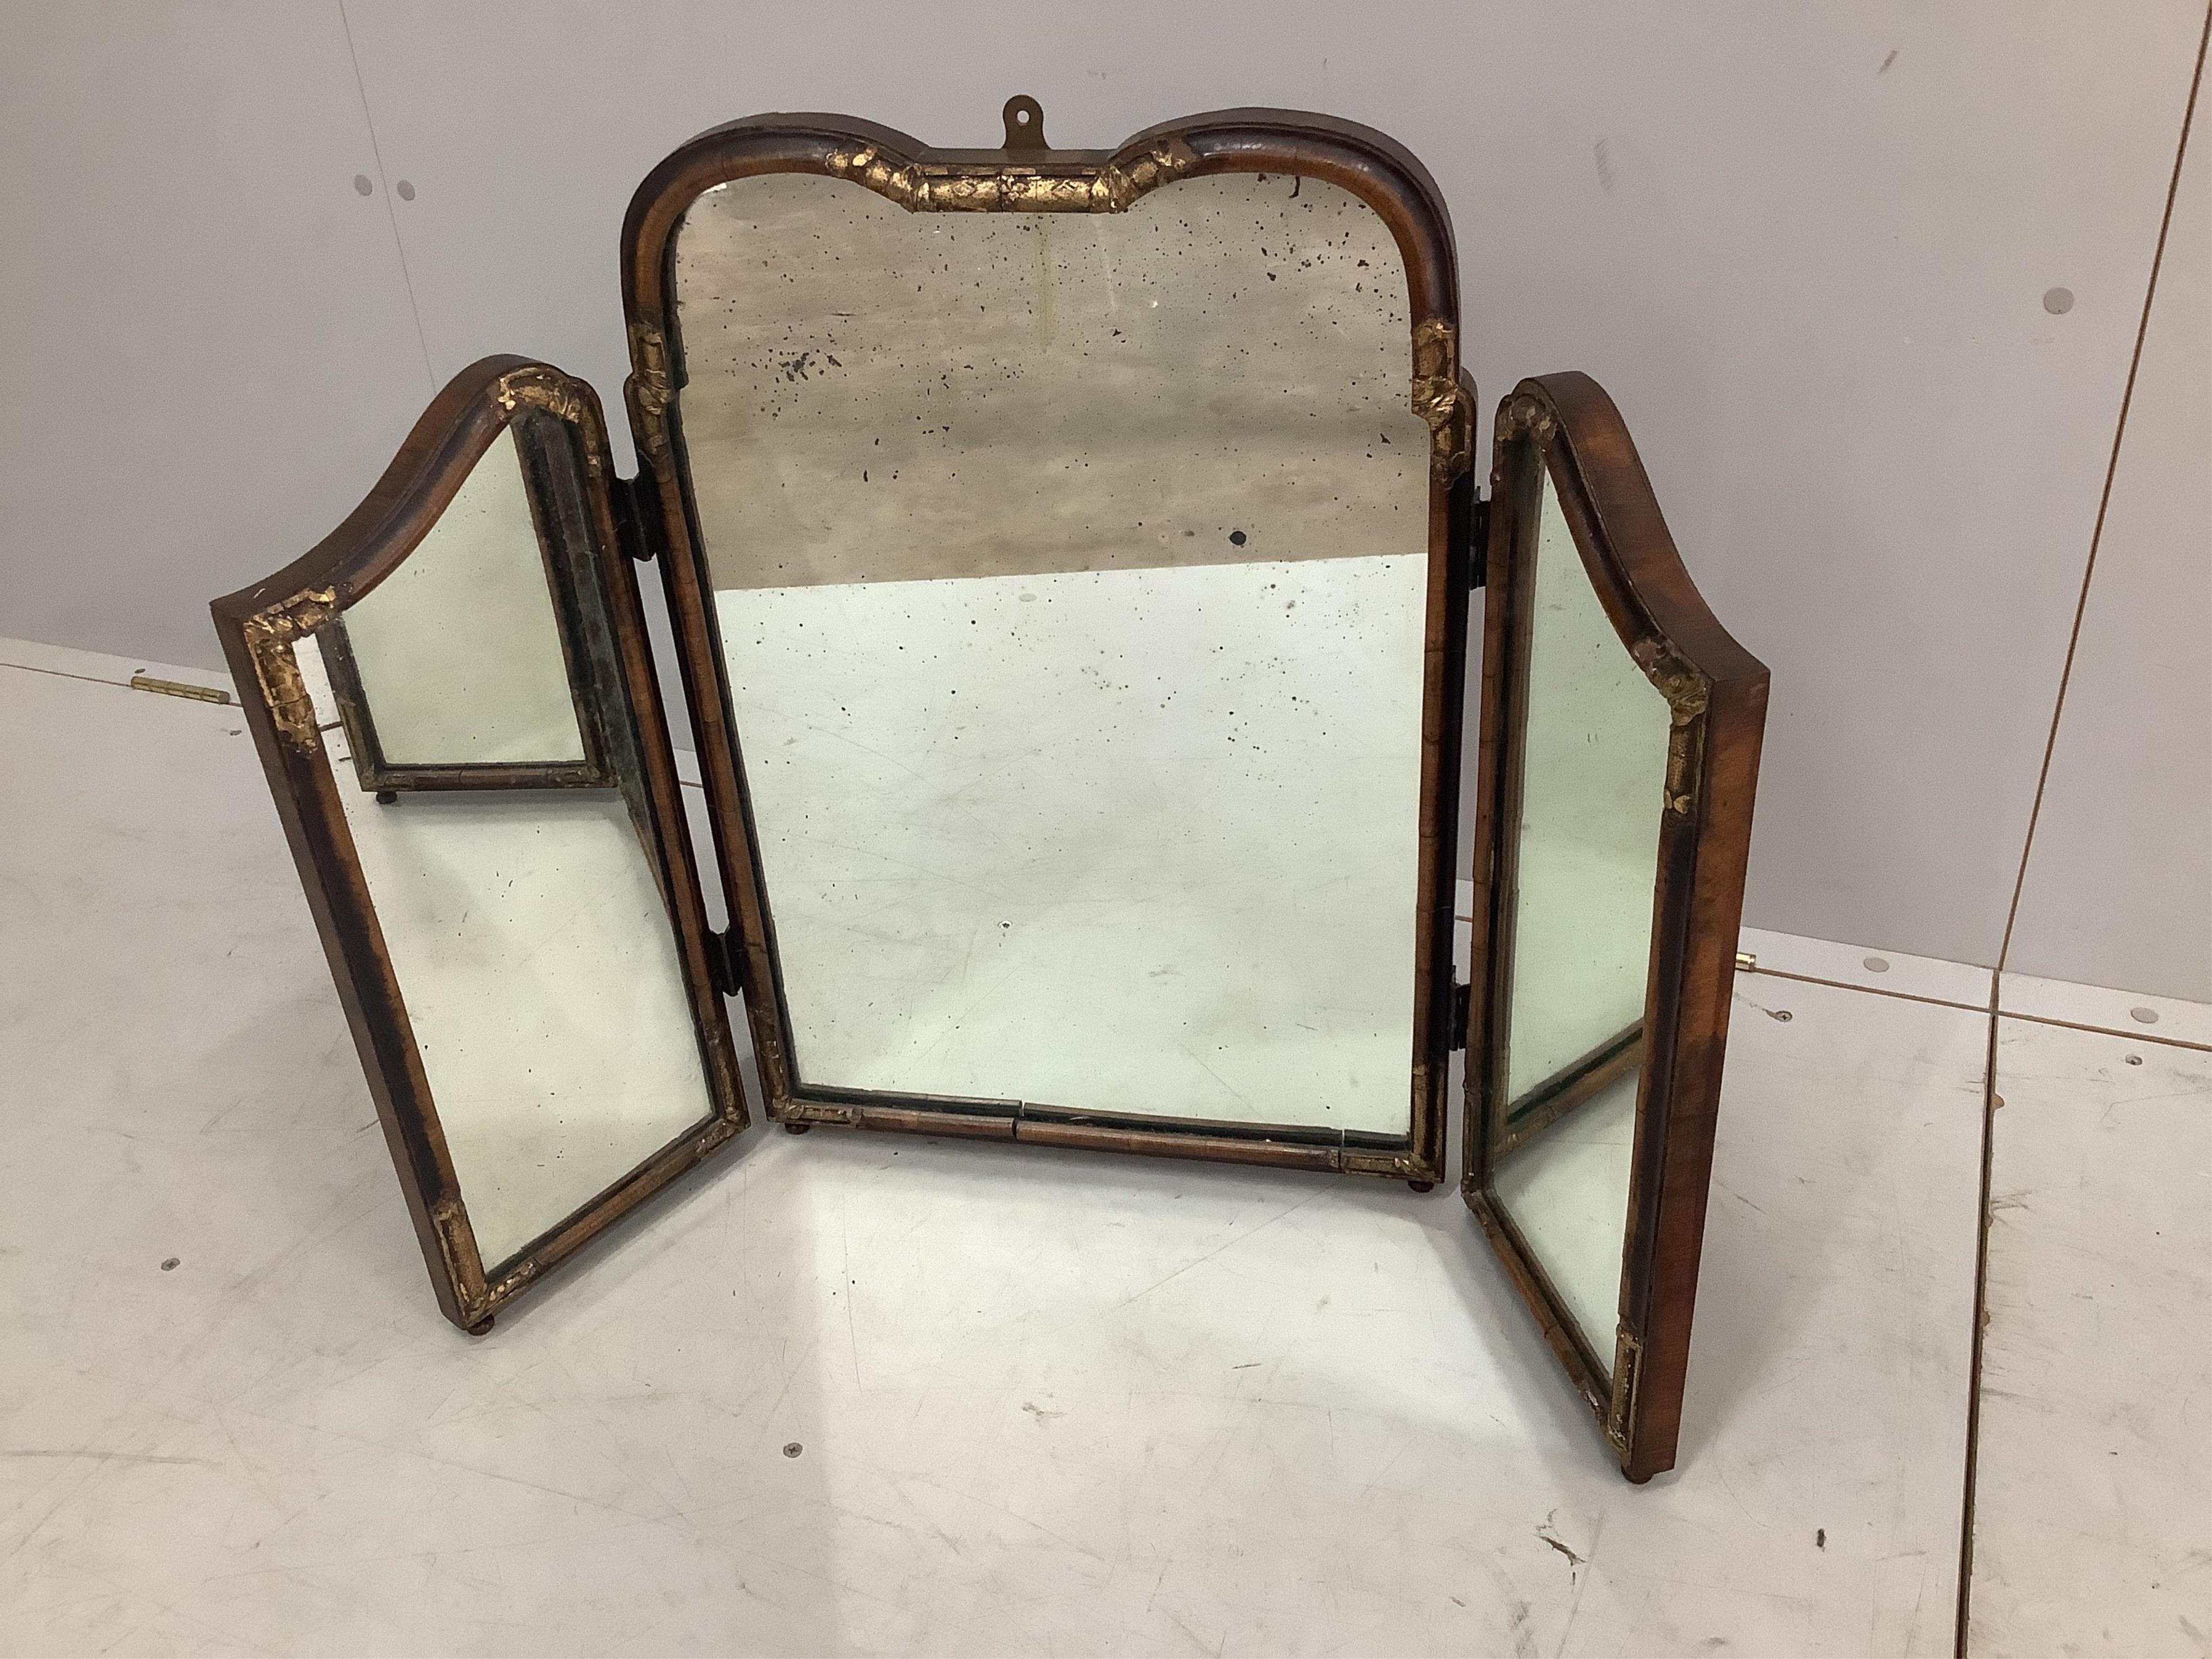 A Queen Anne Revival parcel-gilt walnut folding triptych dressing table mirror, height 64cm. Condition - fair